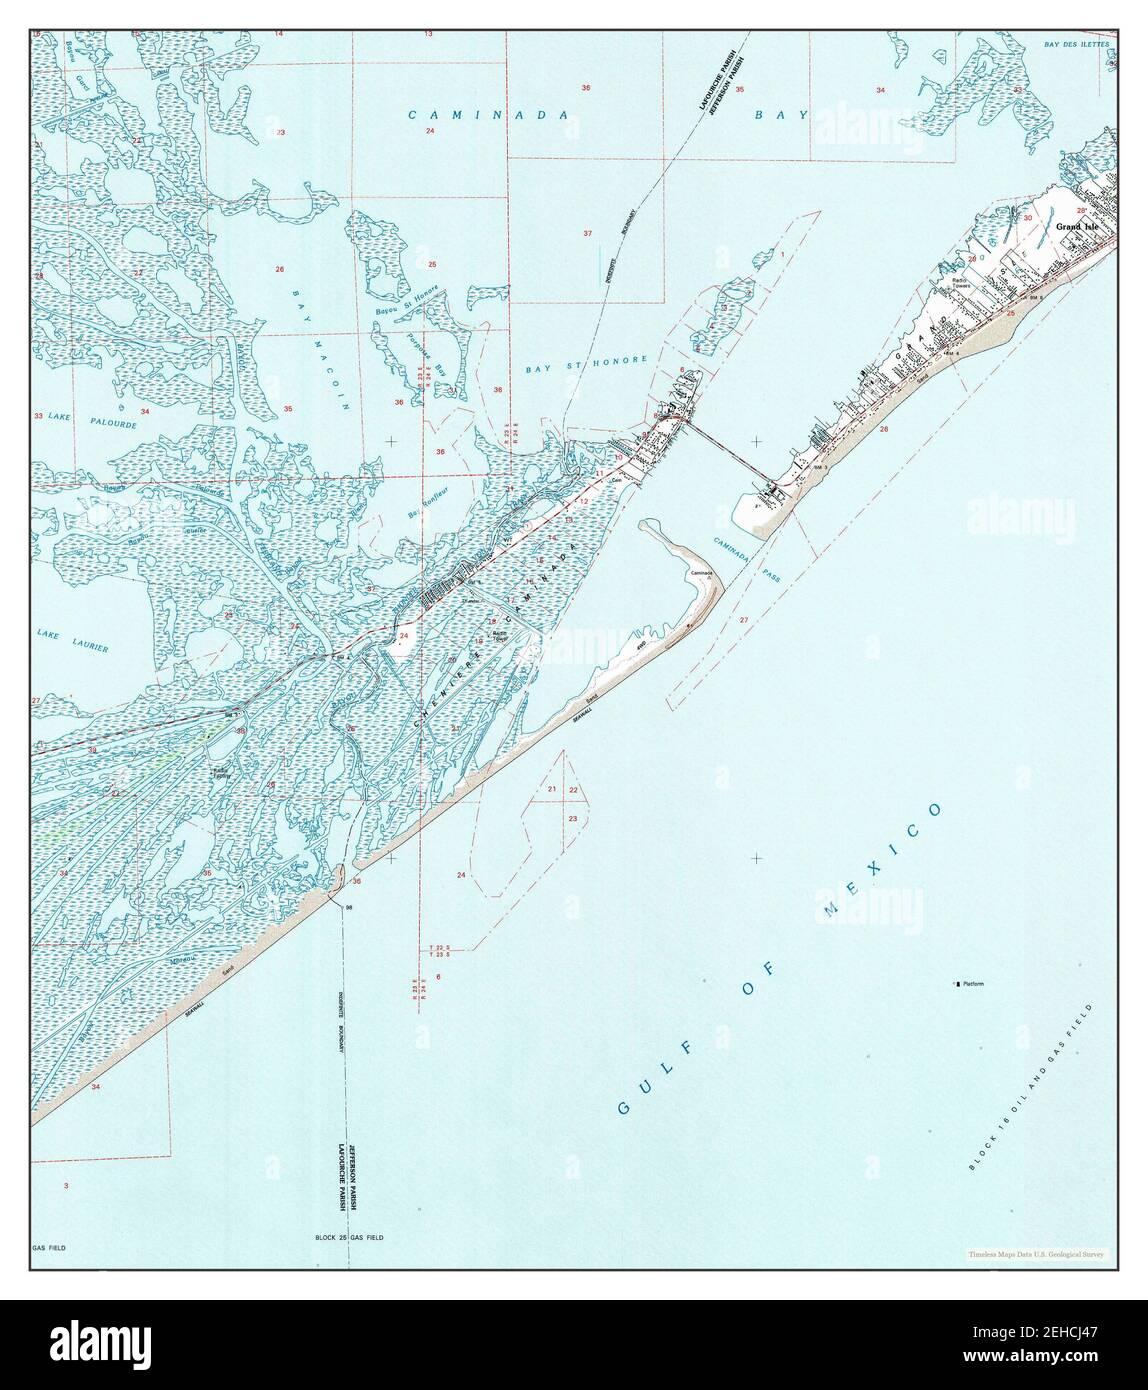 Caminada Pass, Louisiana, map 1994, 1:24000, United States of America by Timeless Maps, data U.S. Geological Survey Stock Photo